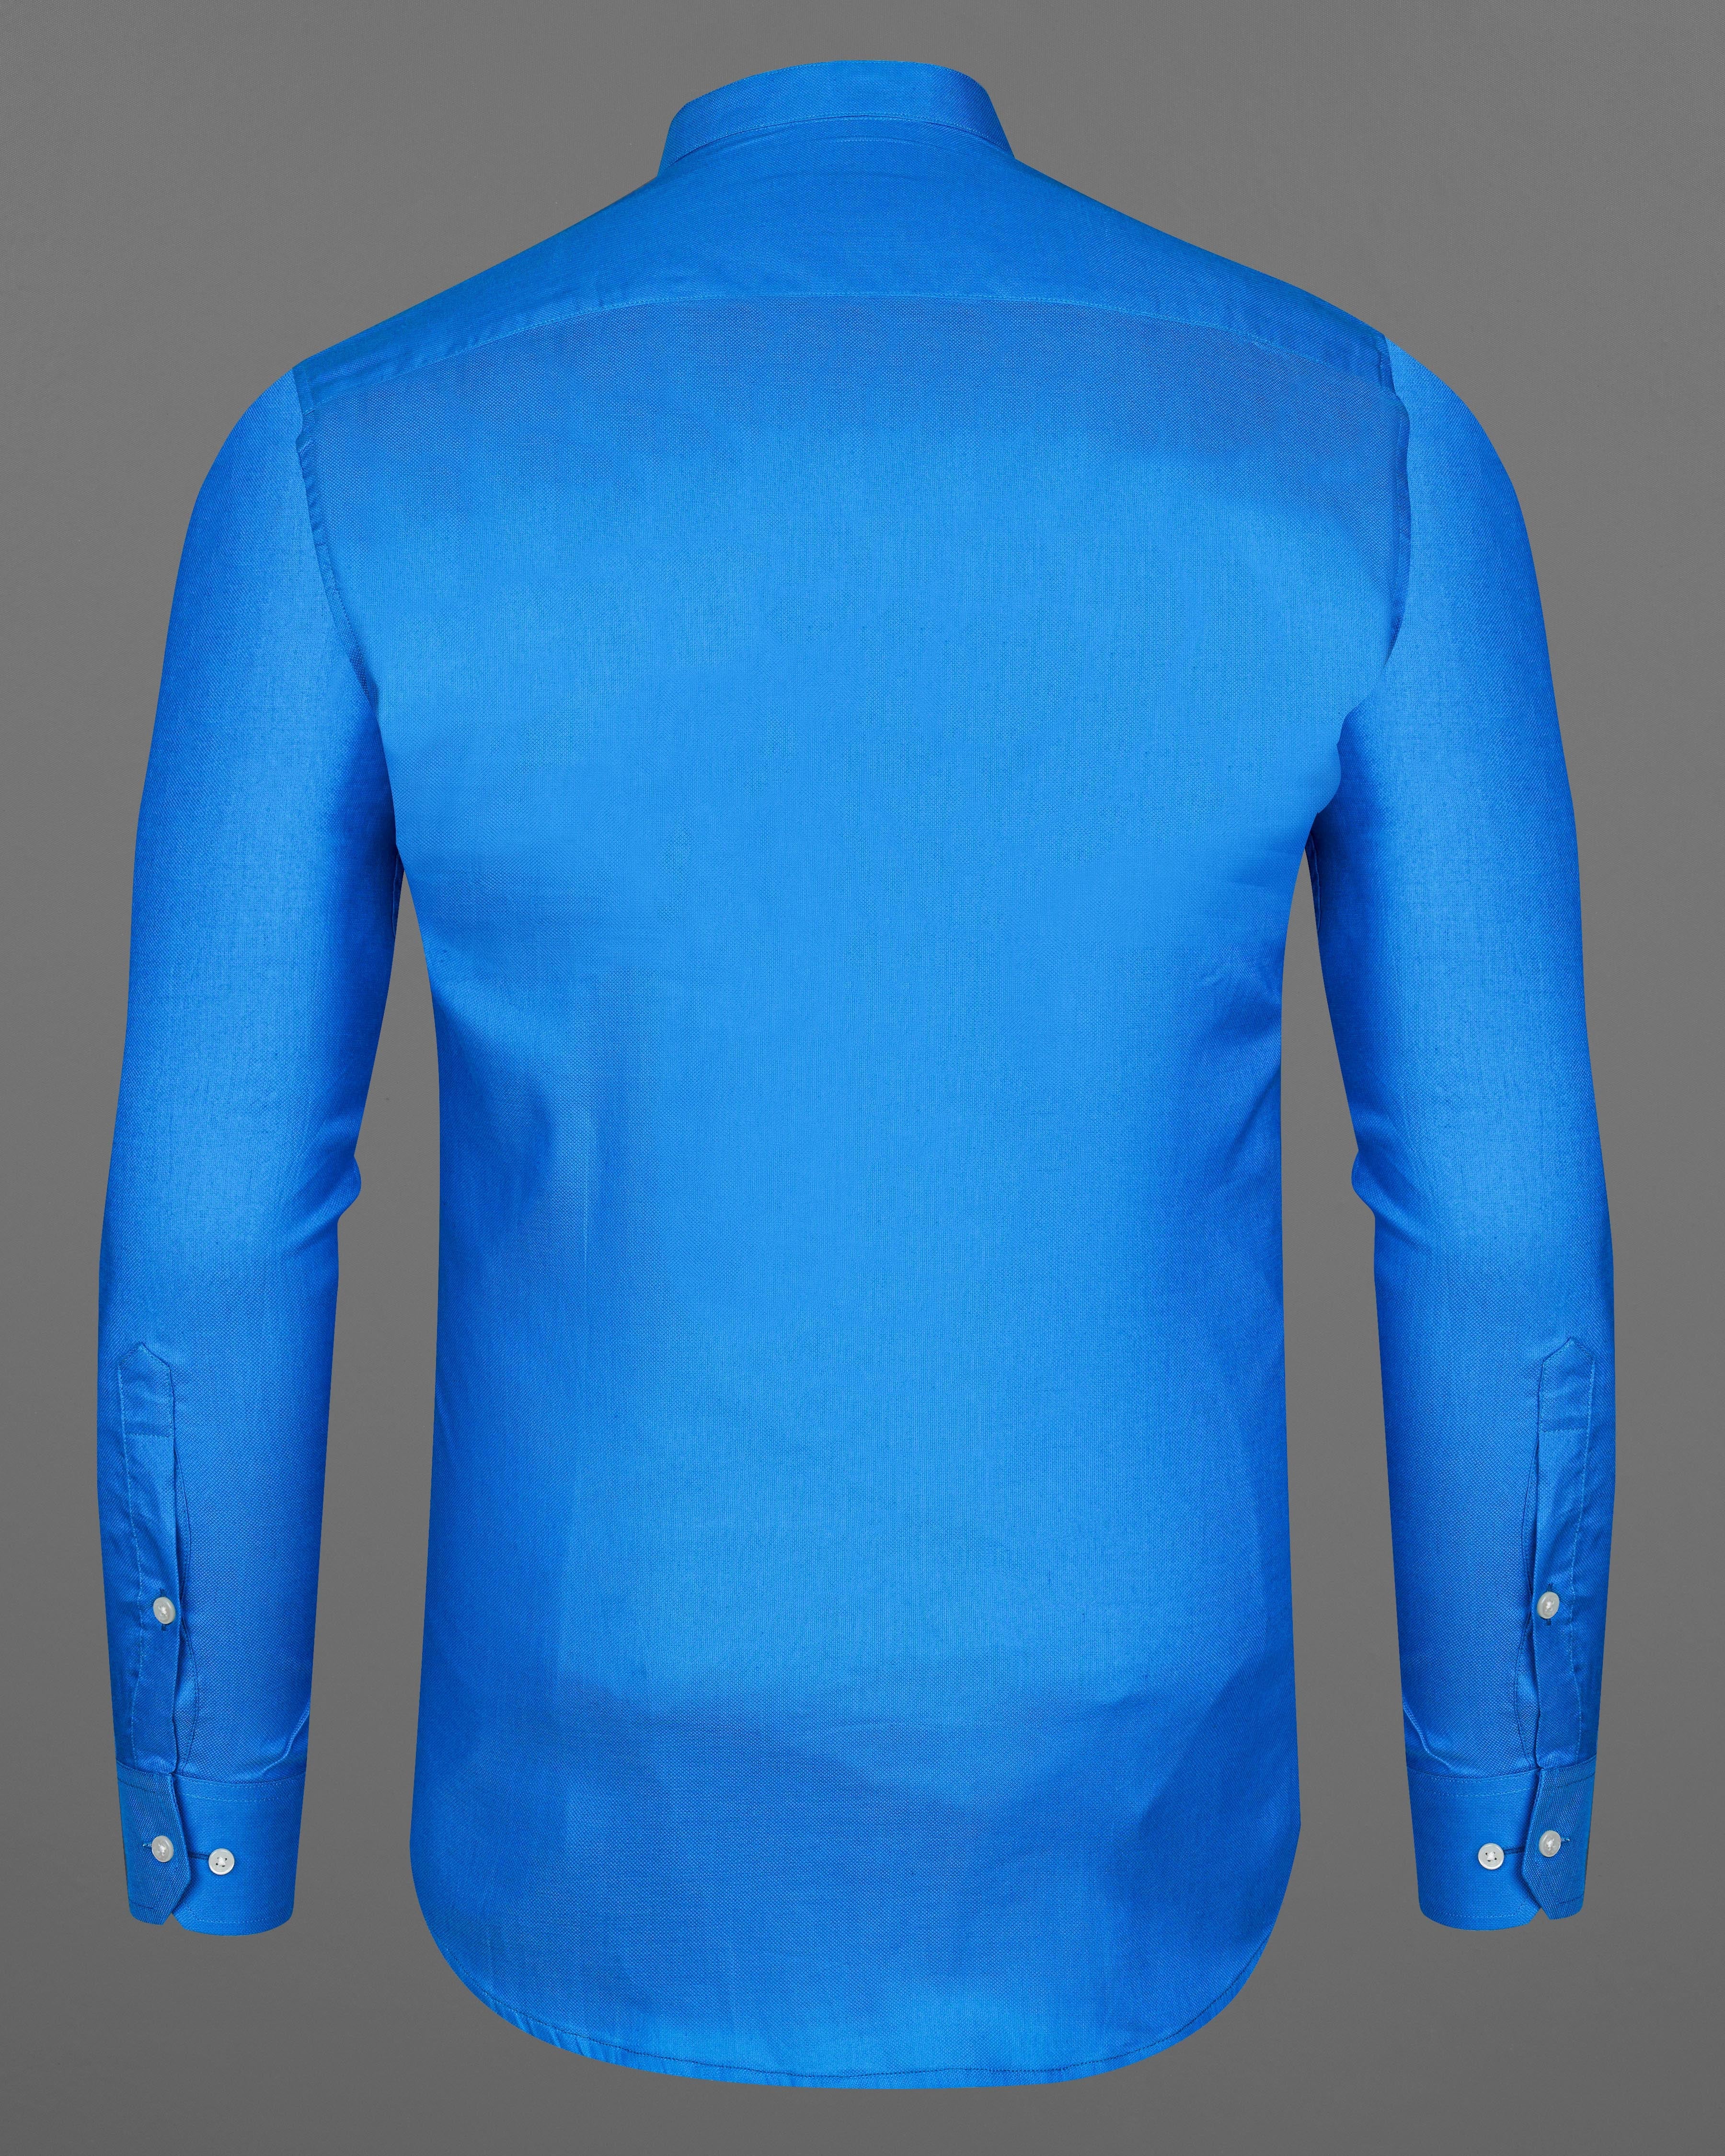 Radiance Blue Dobby Textured Premium Giza Cotton Shirt  8755-M-38,8755-M-H-38,8755-M-39,8755-M-H-39,8755-M-40,8755-M-H-40,8755-M-42,8755-M-H-42,8755-M-44,8755-M-H-44,8755-M-46,8755-M-H-46,8755-M-48,8755-M-H-48,8755-M-50,8755-M-H-50,8755-M-52,8755-M-H-52